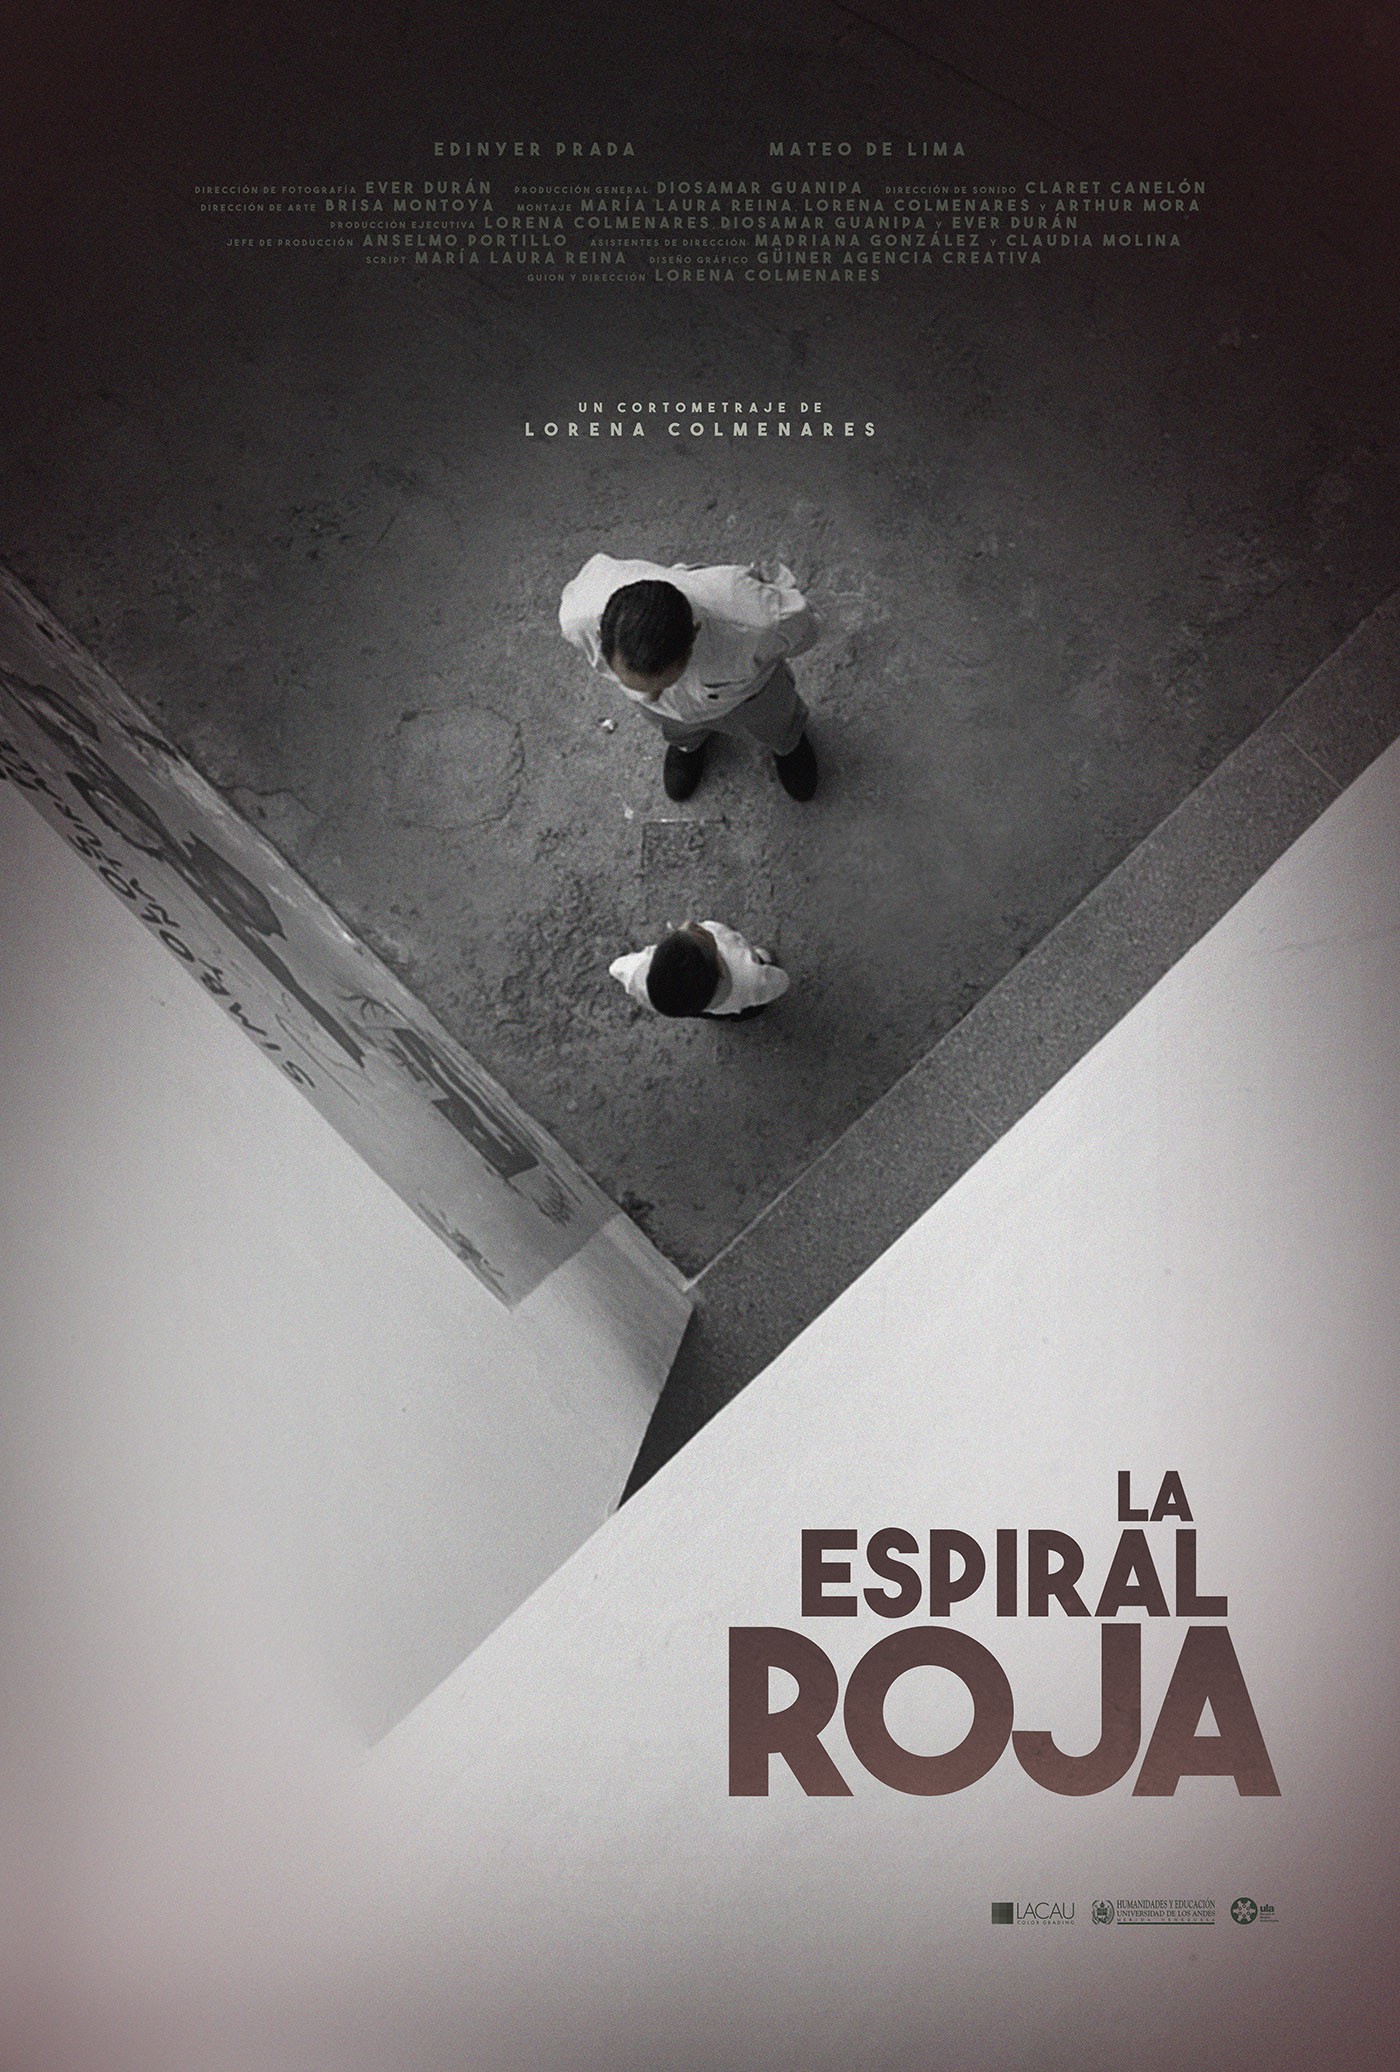 Mega Sized Movie Poster Image for La espiral roja